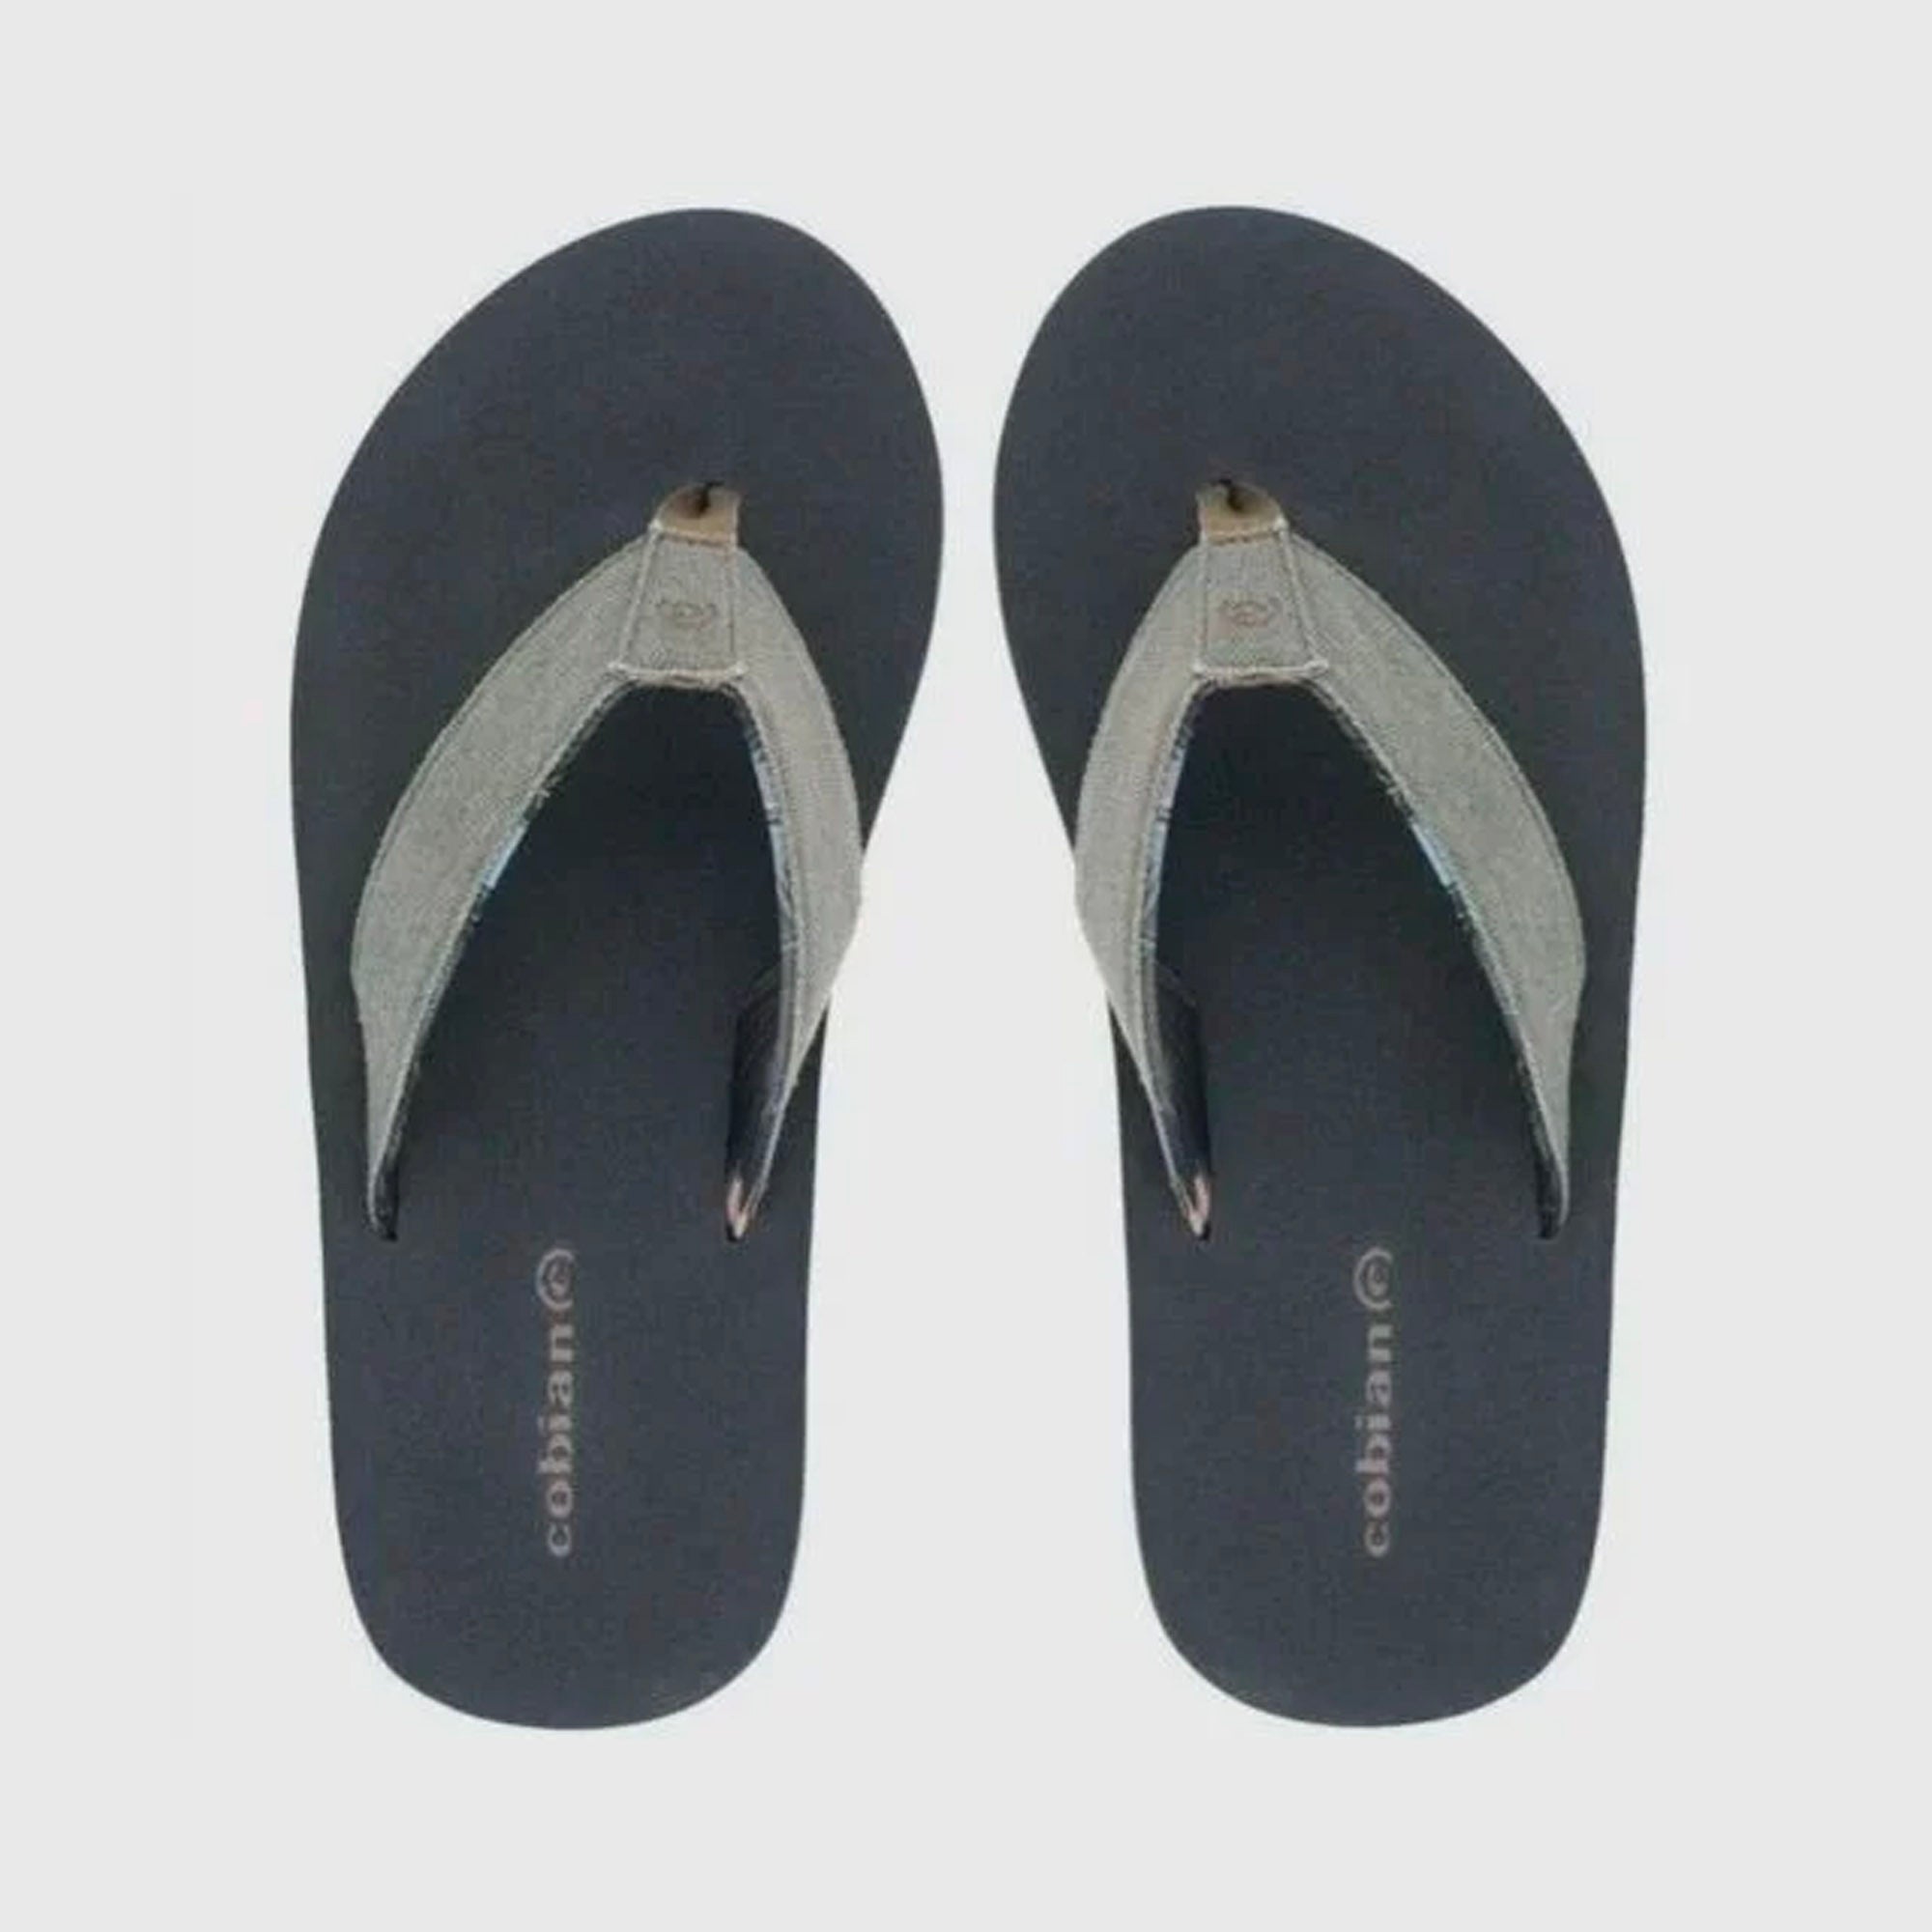 Cobian Beach Comber Men's Sandals